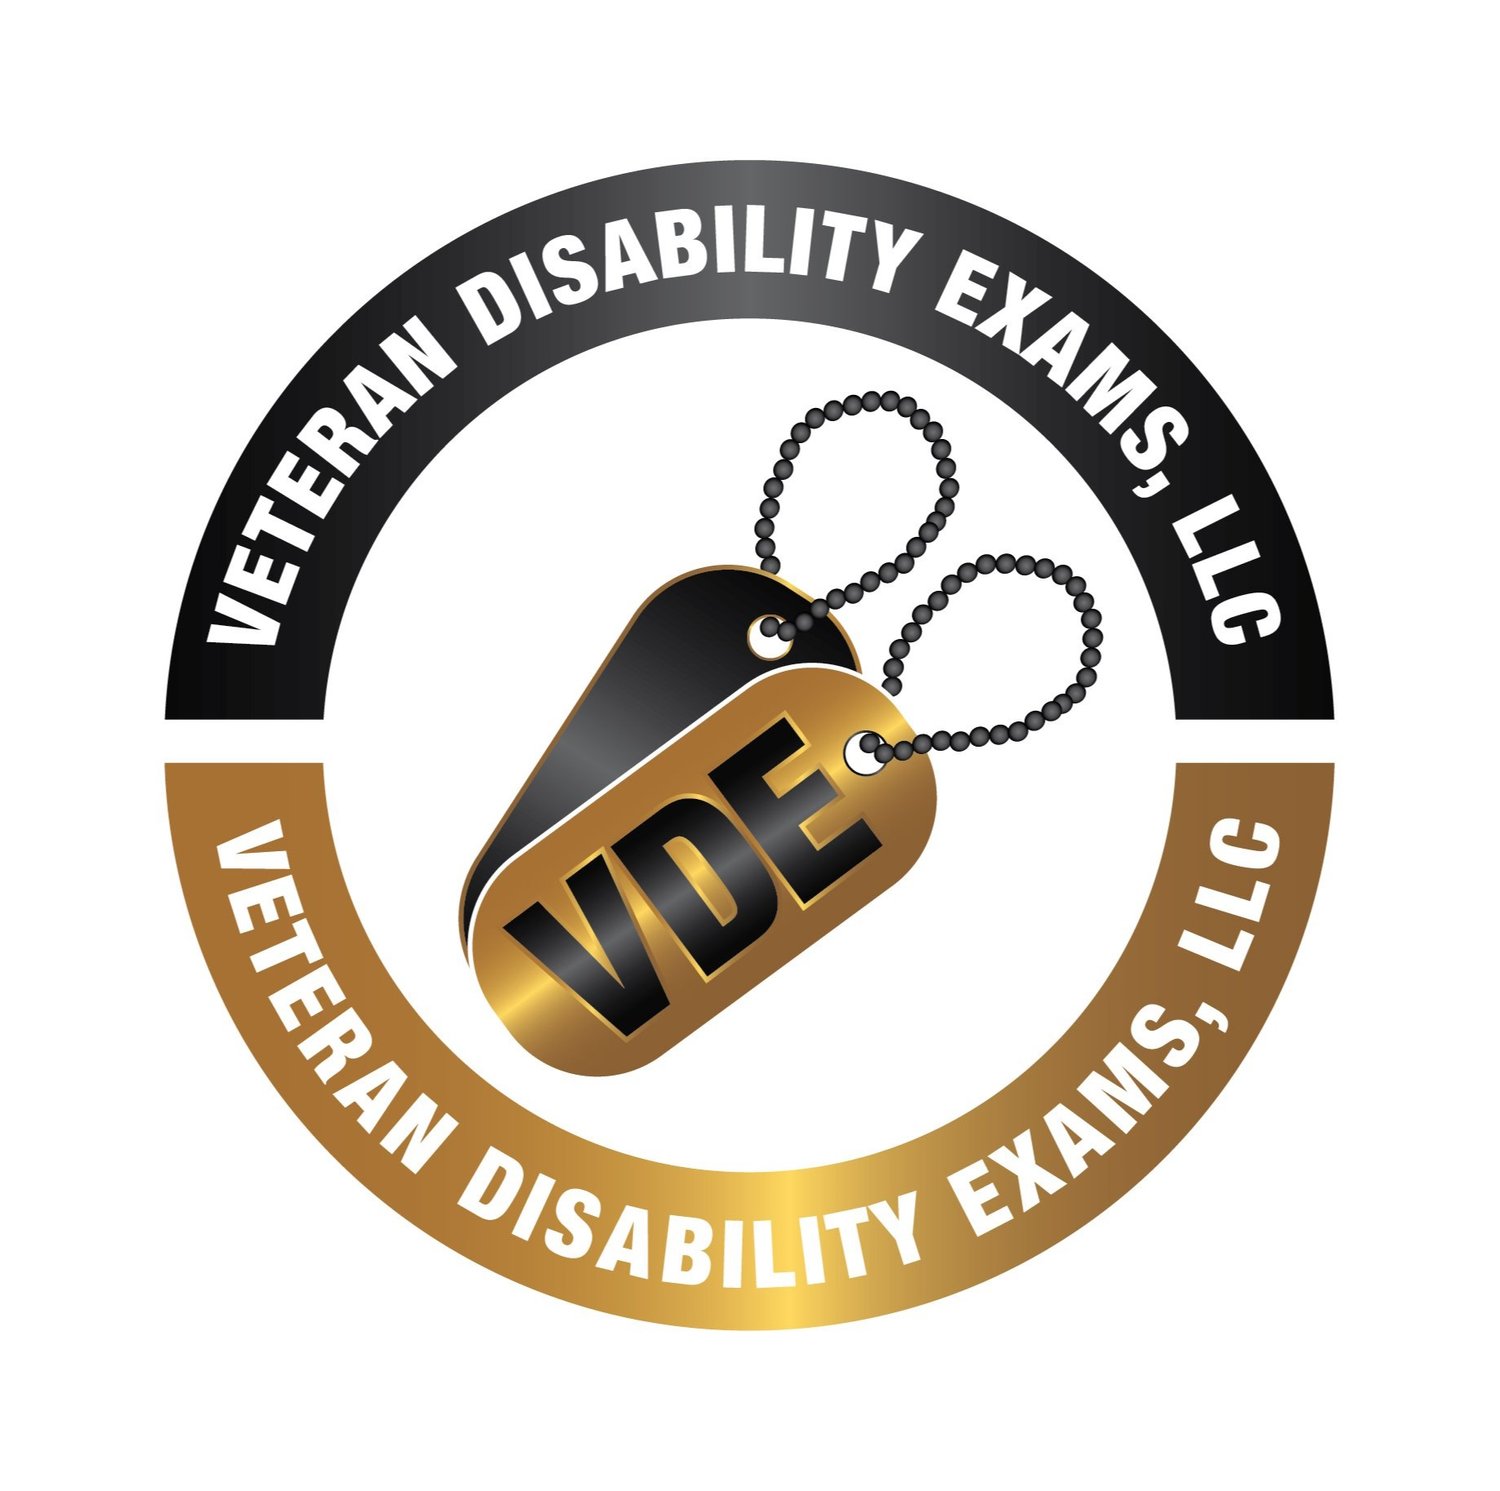 Veteran Disability Exams, LLC